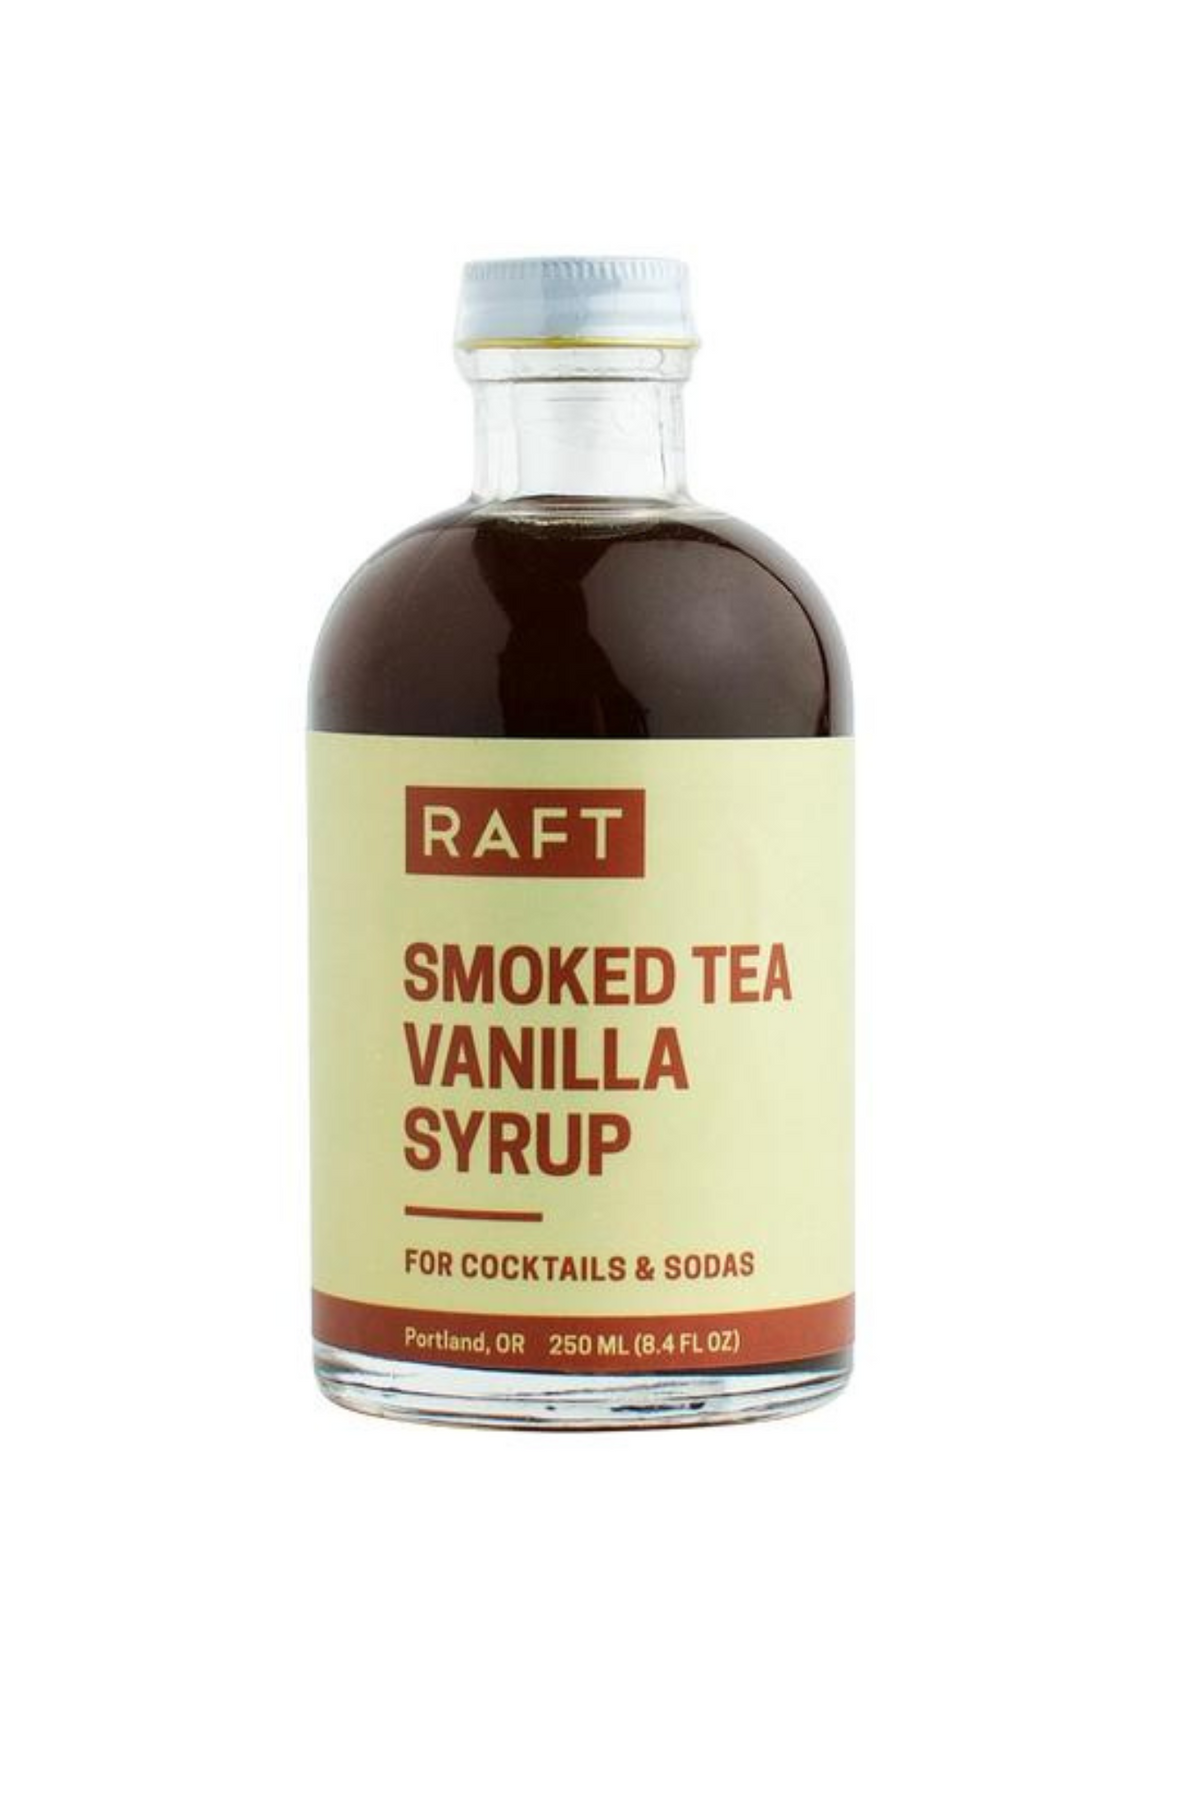 RAFT Smoked Tea Vanilla Syrup